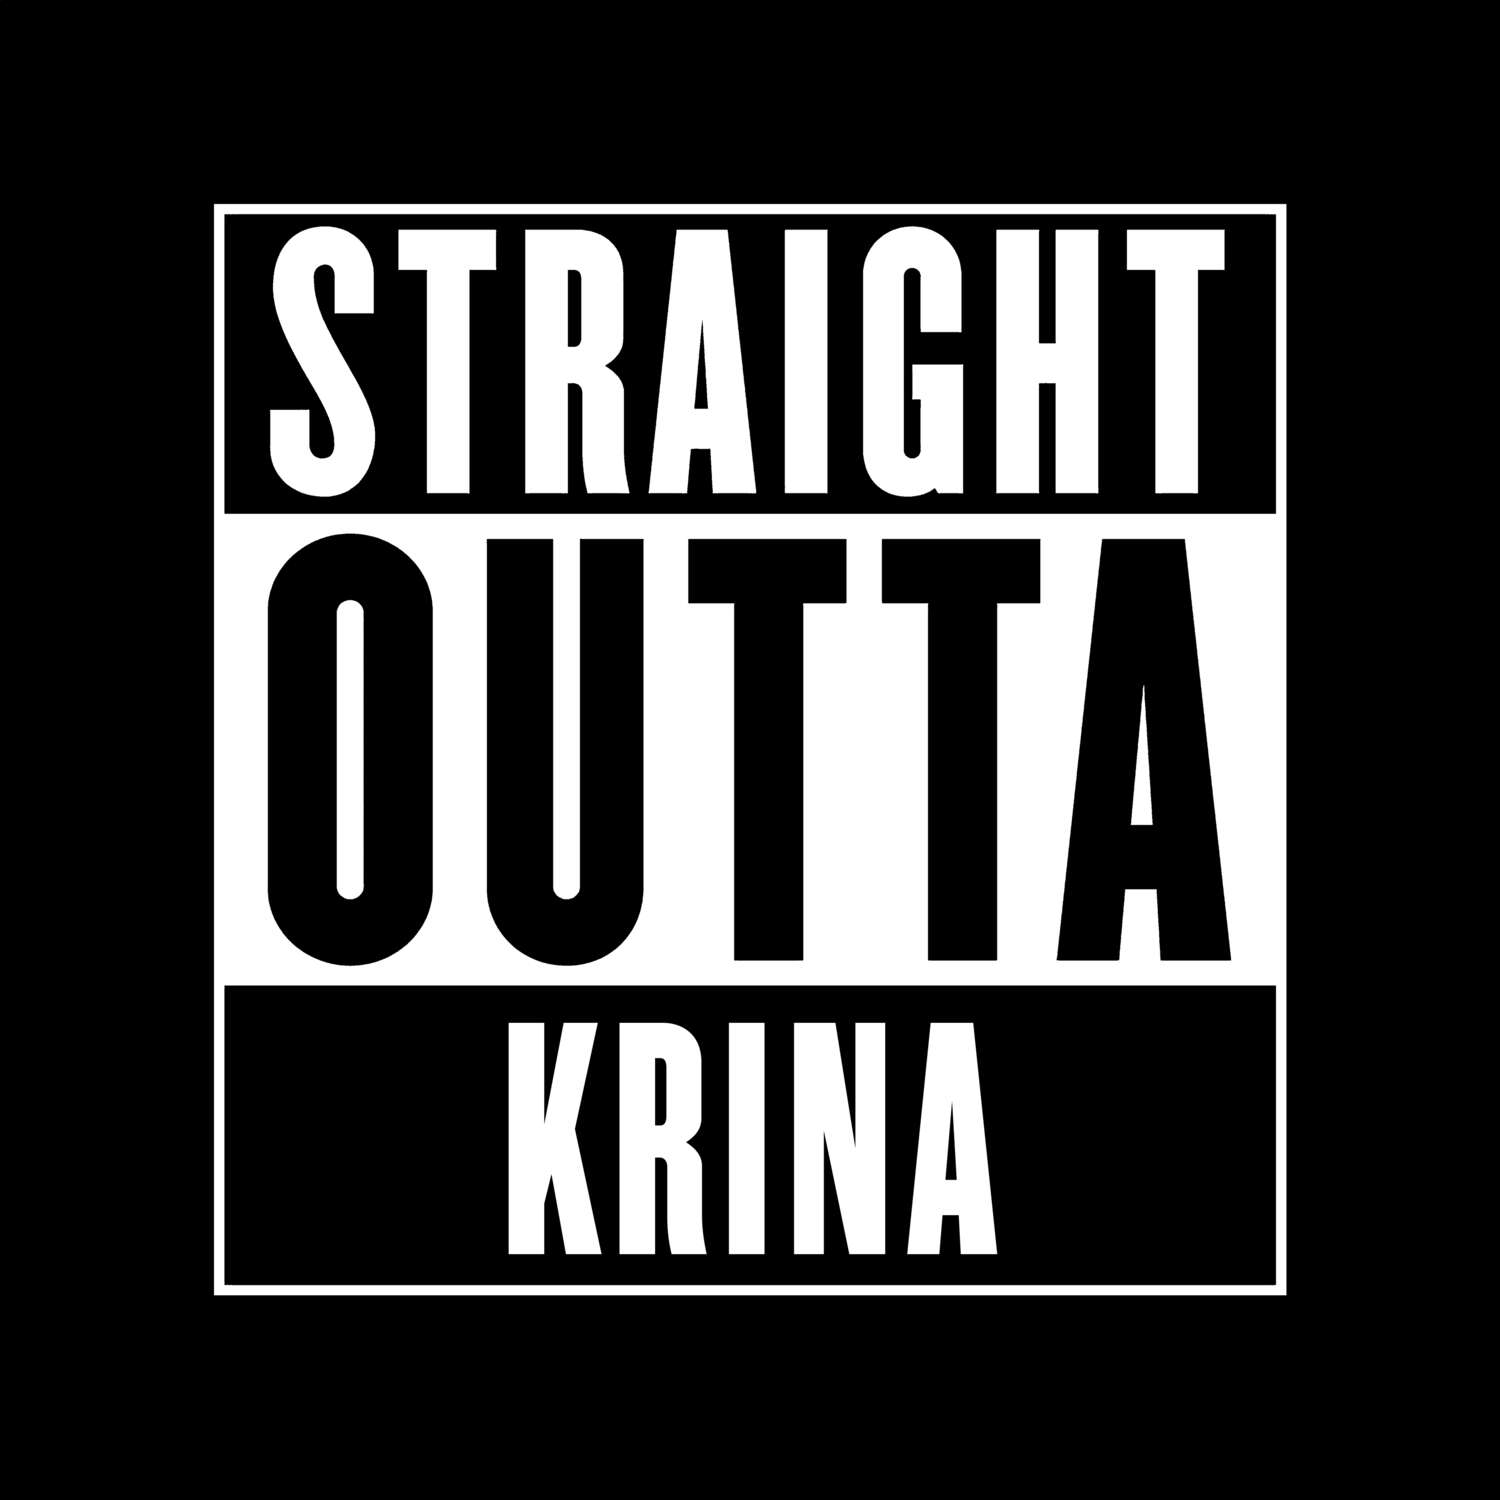 Krina T-Shirt »Straight Outta«